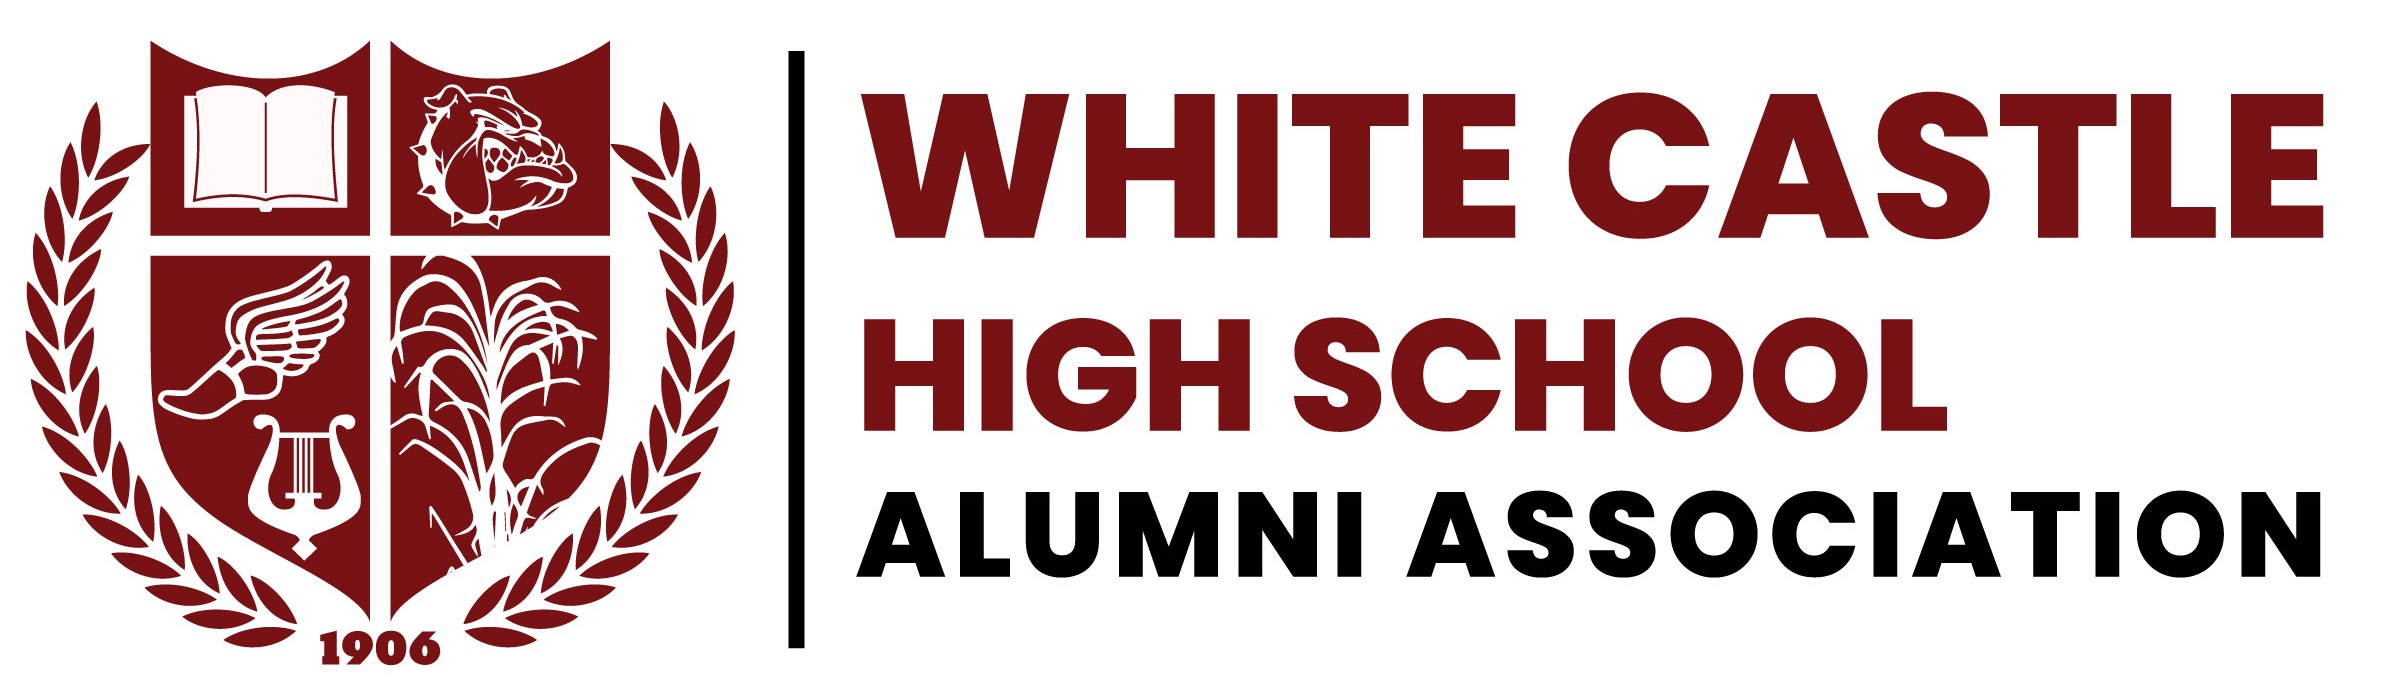 White Castle High School Alumni Association